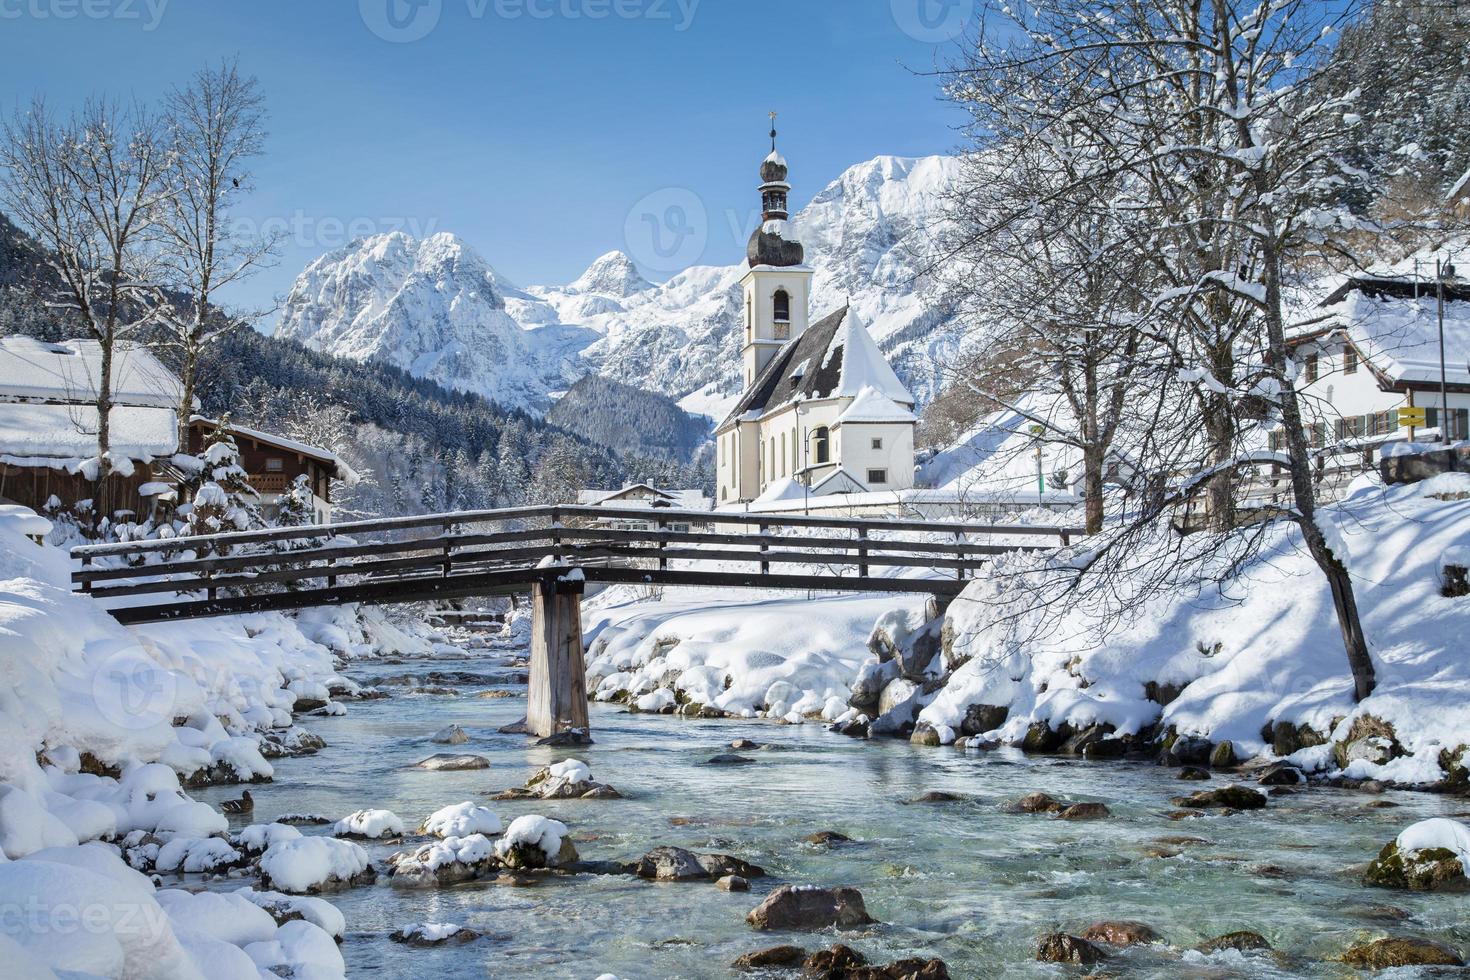 Ramsau in winter, Berchtesgadener Land, Bavaria, Germany photo